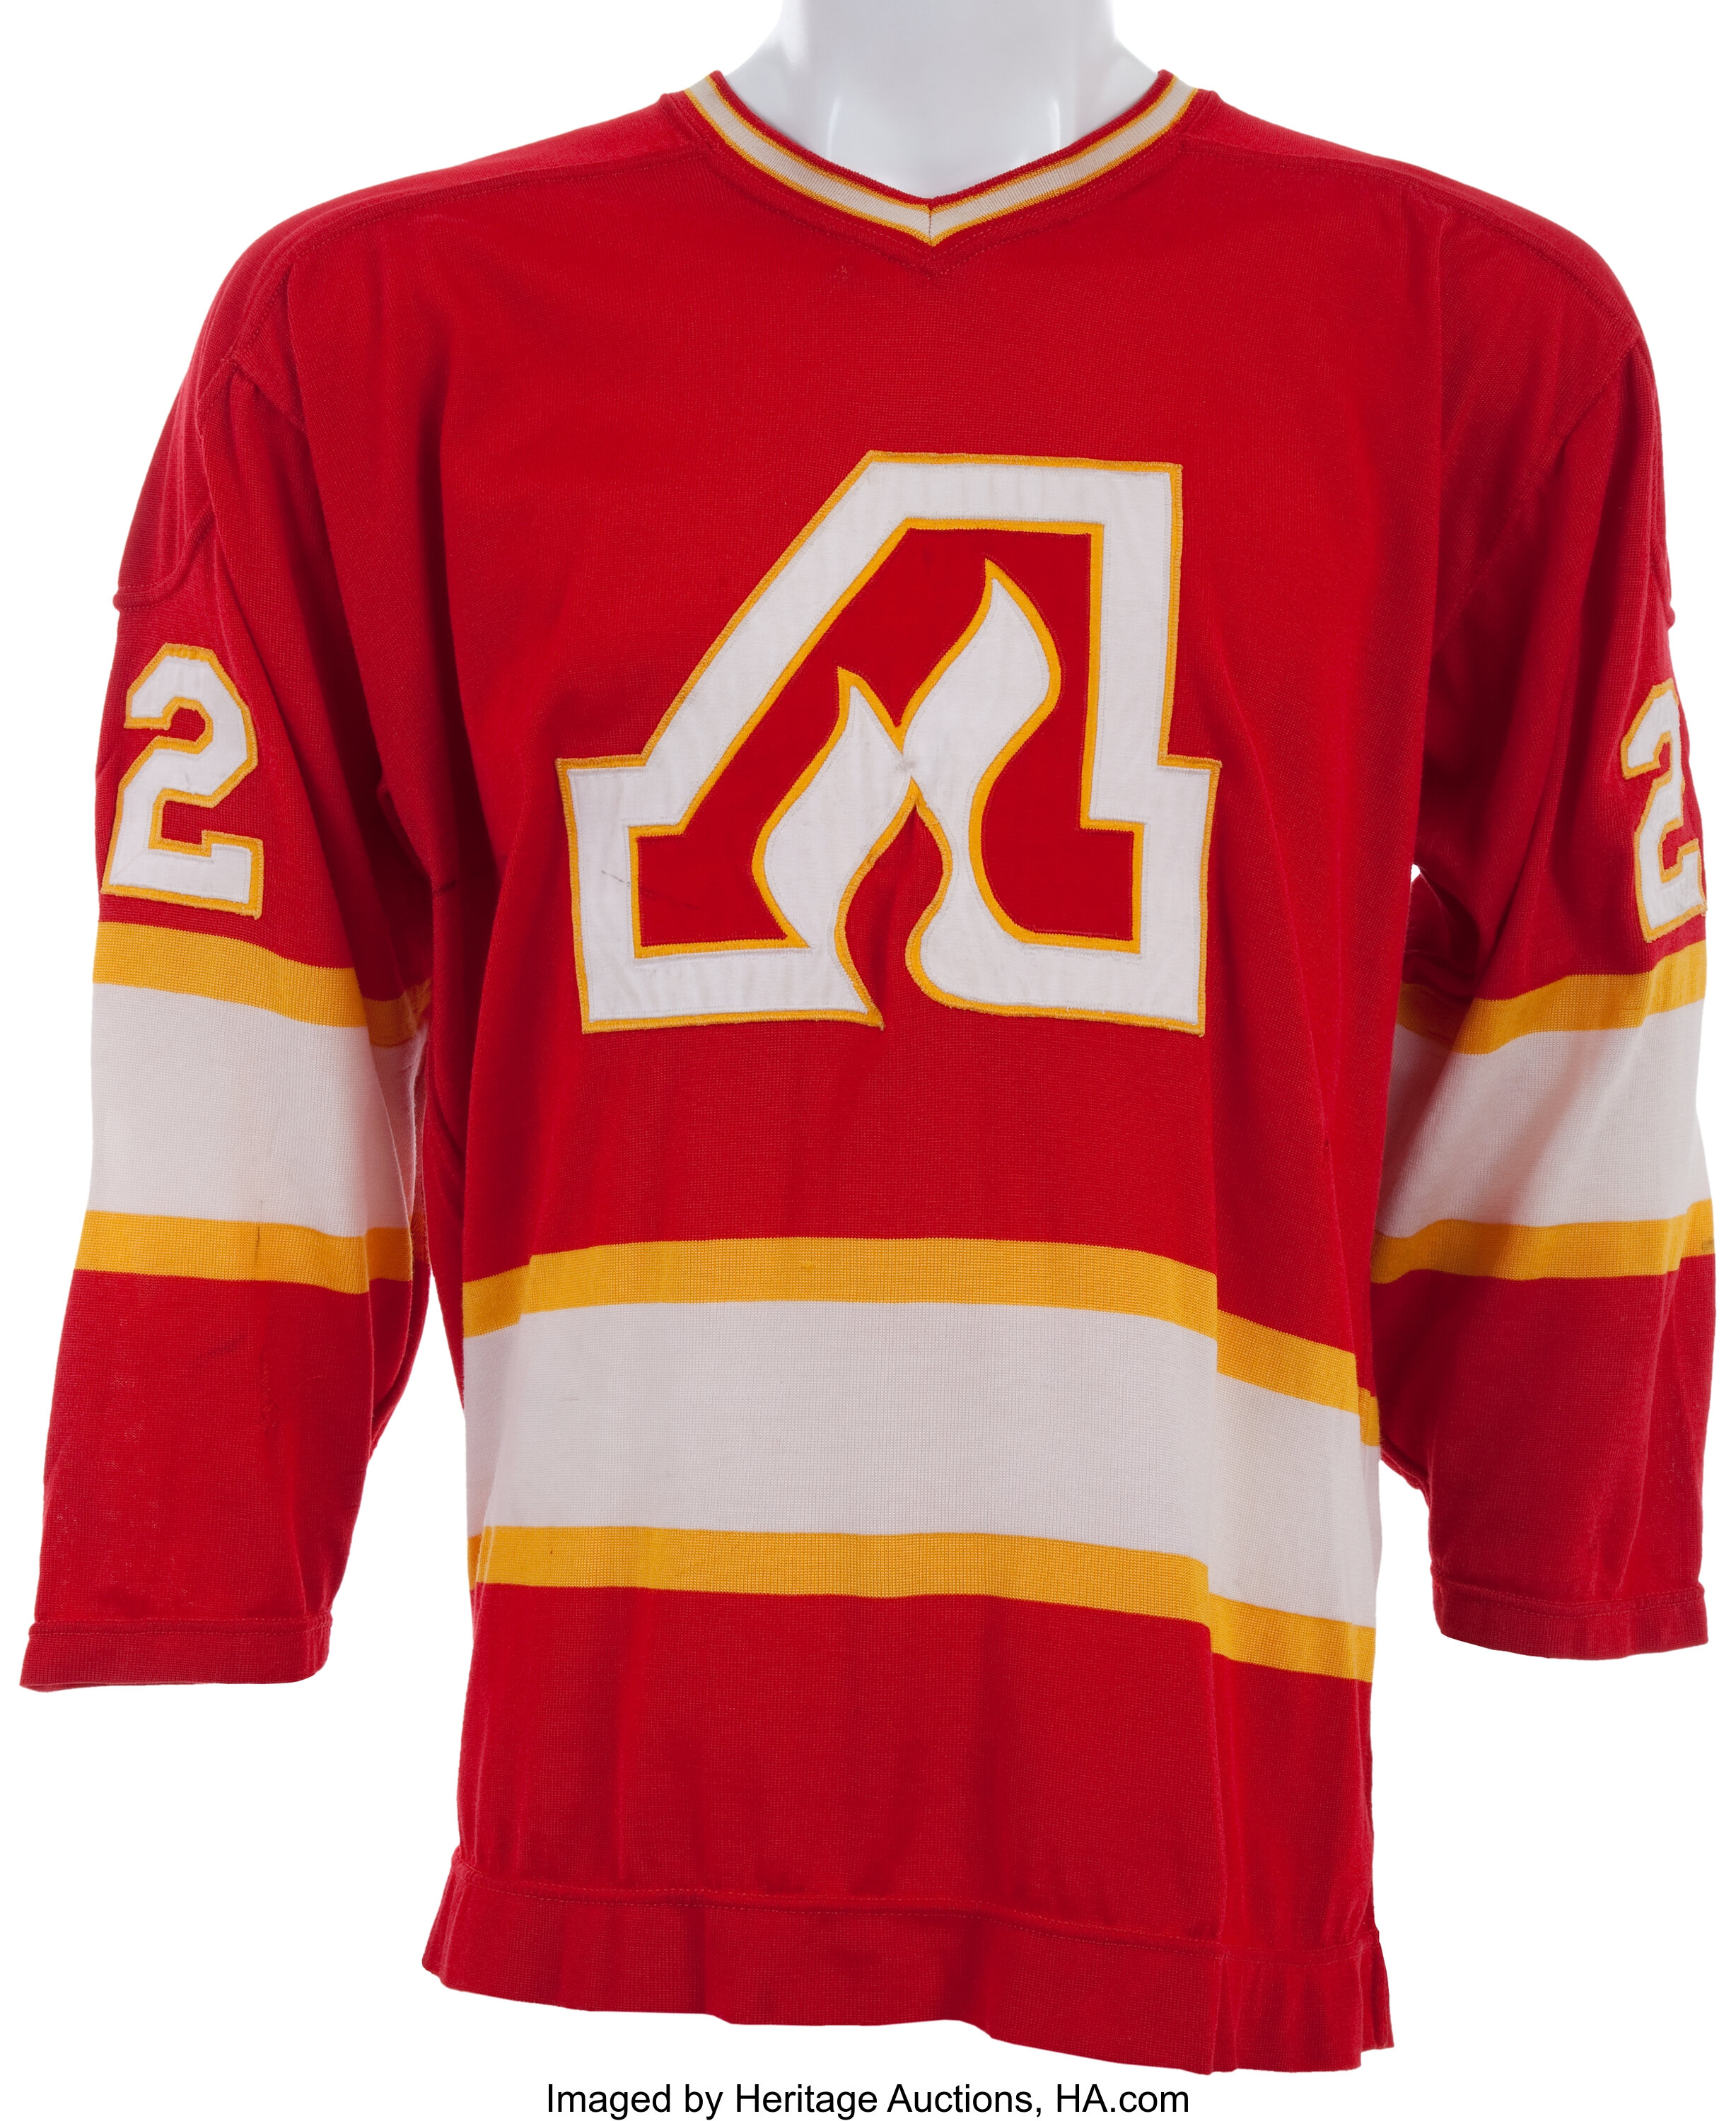 ECHL team honors Atlanta Flames with new alternate jerseys - The Hockey News